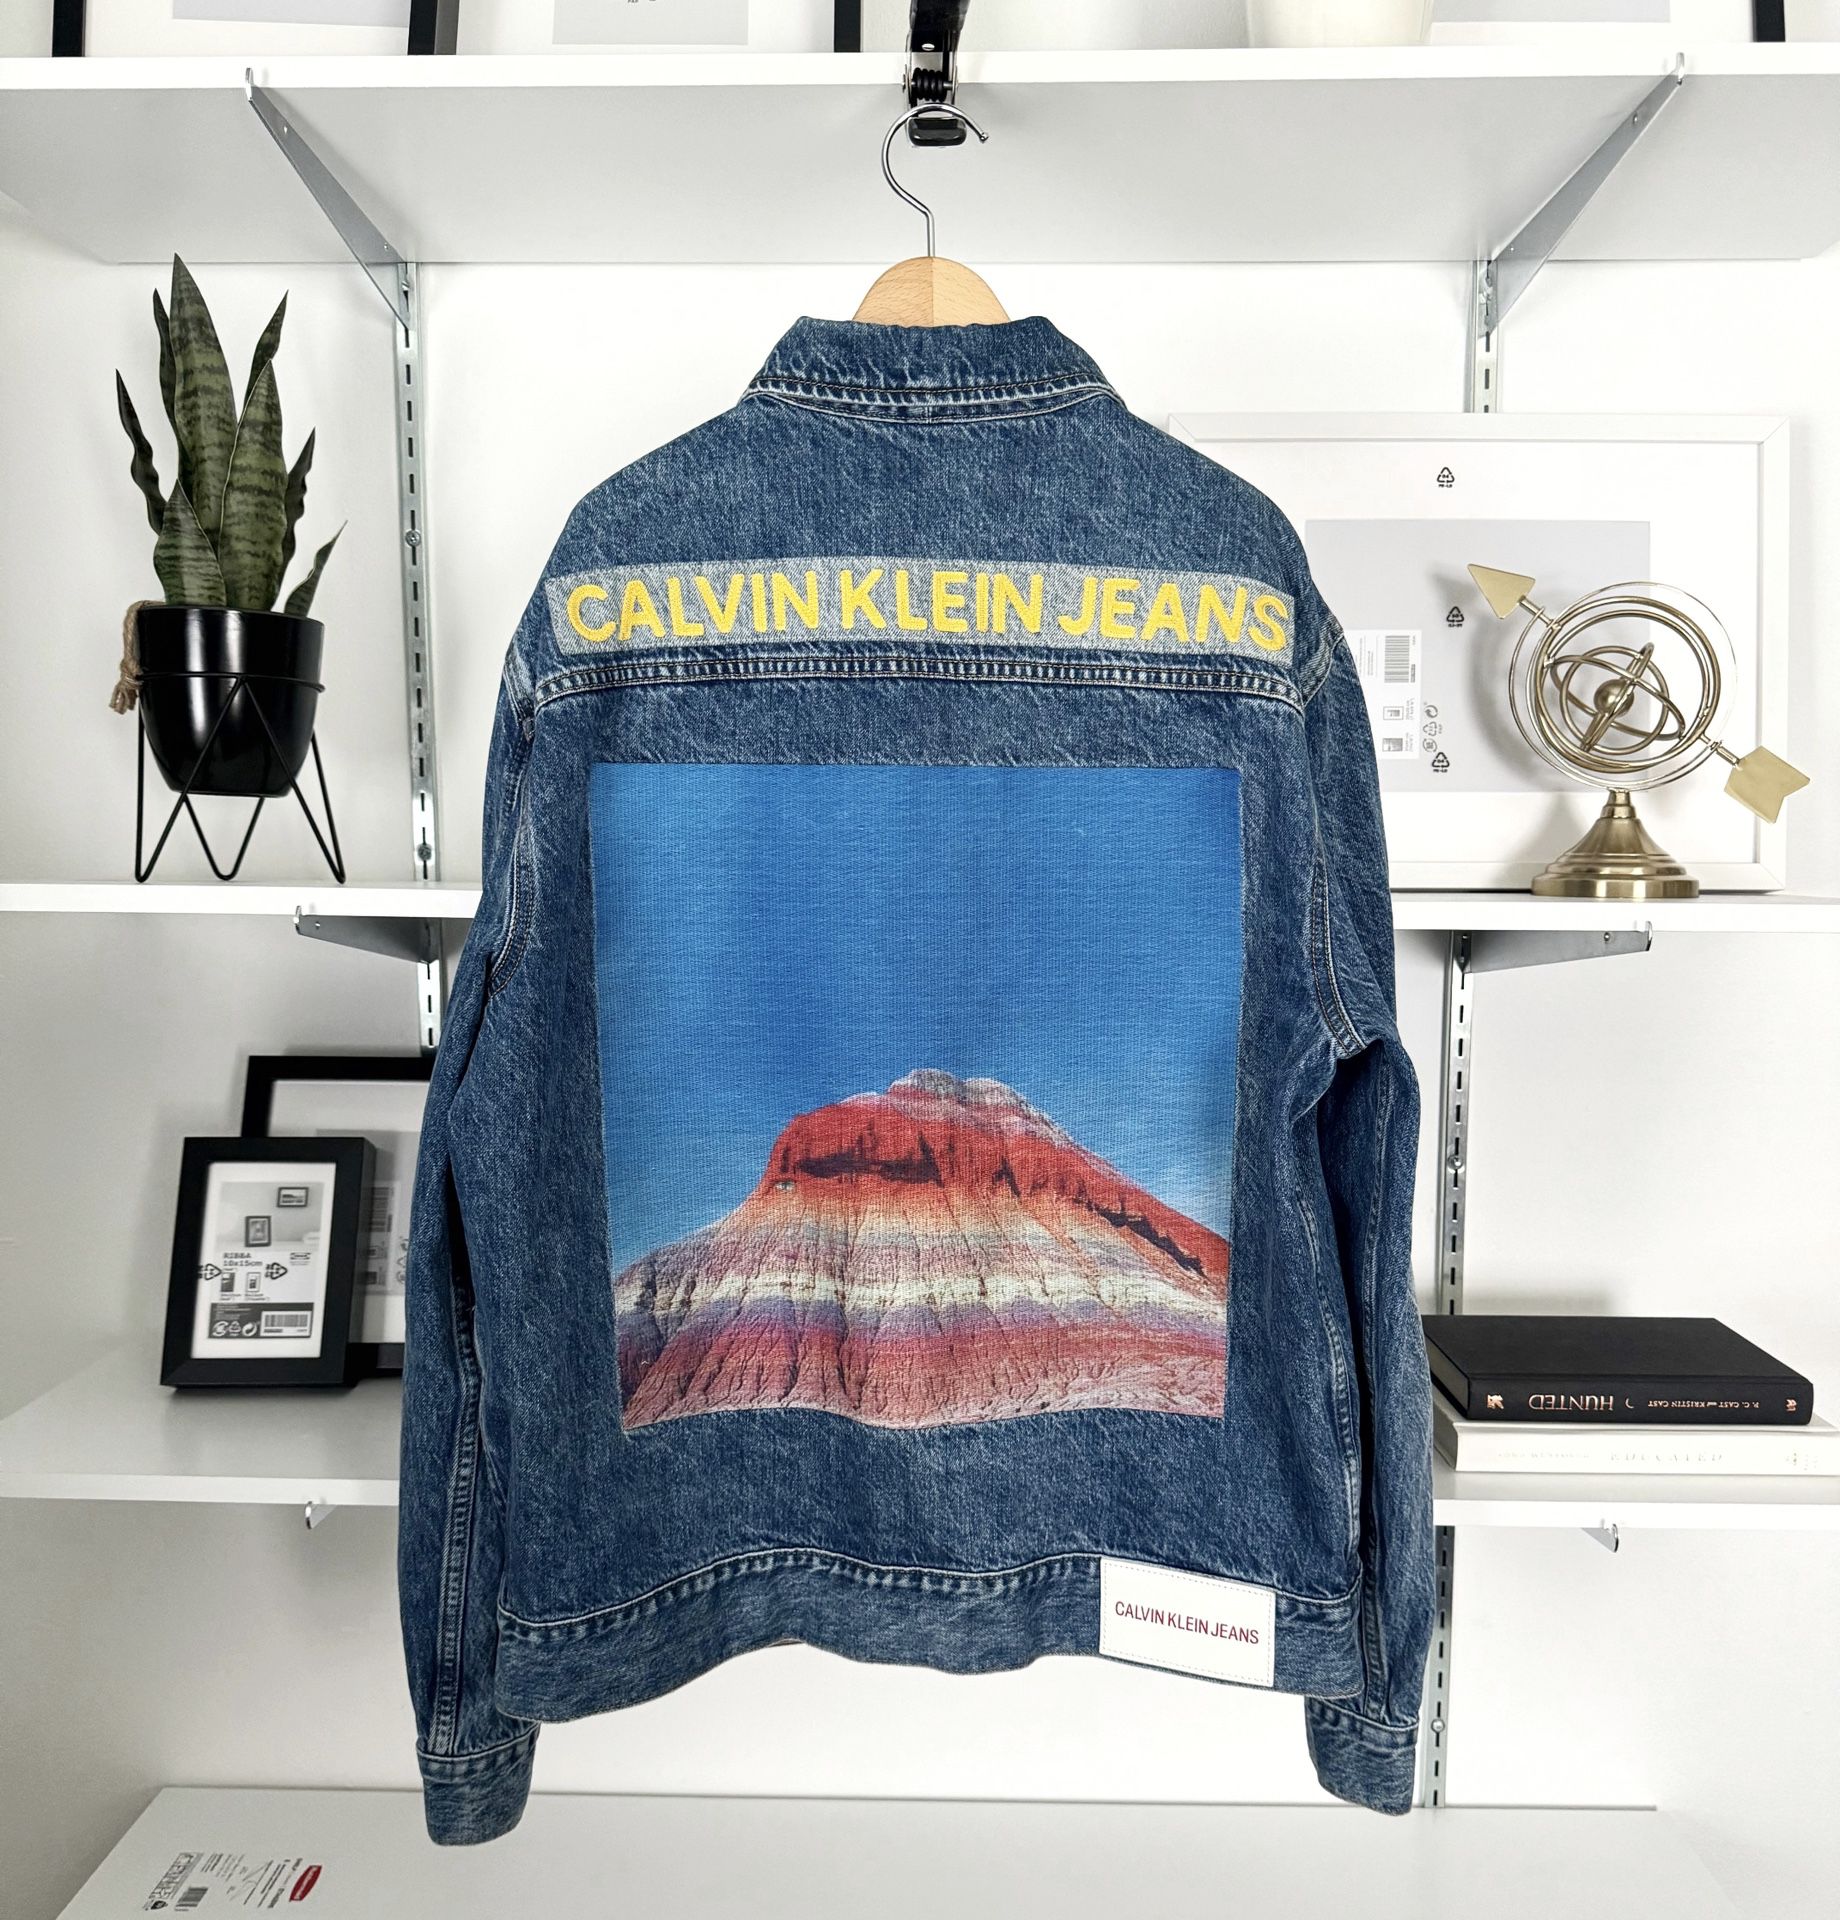 New! Mens Calvin Klein Embro Mountain Jean jacket. Retail $180. Size XL. Brand new without tags.